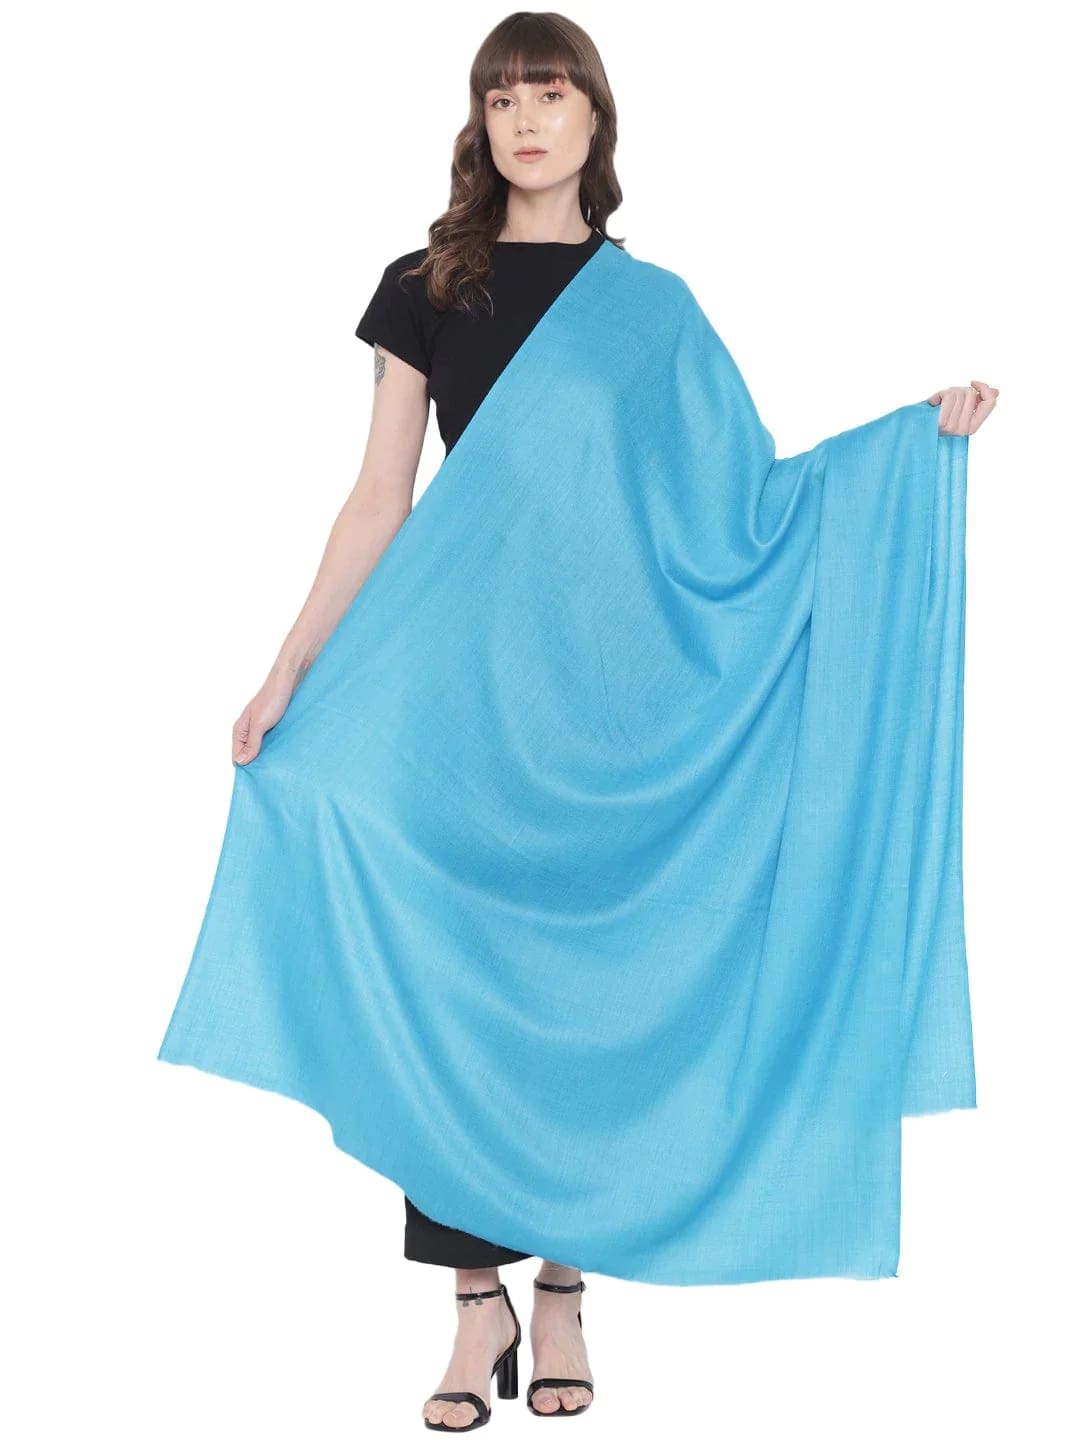 NOU! Sal de Dimensiuni Mari tesut din 100% Lana cu textura ultrafina (Australian Merino Wool) Blue Jasmine -> Cod: MERINO3 - Sal din lana